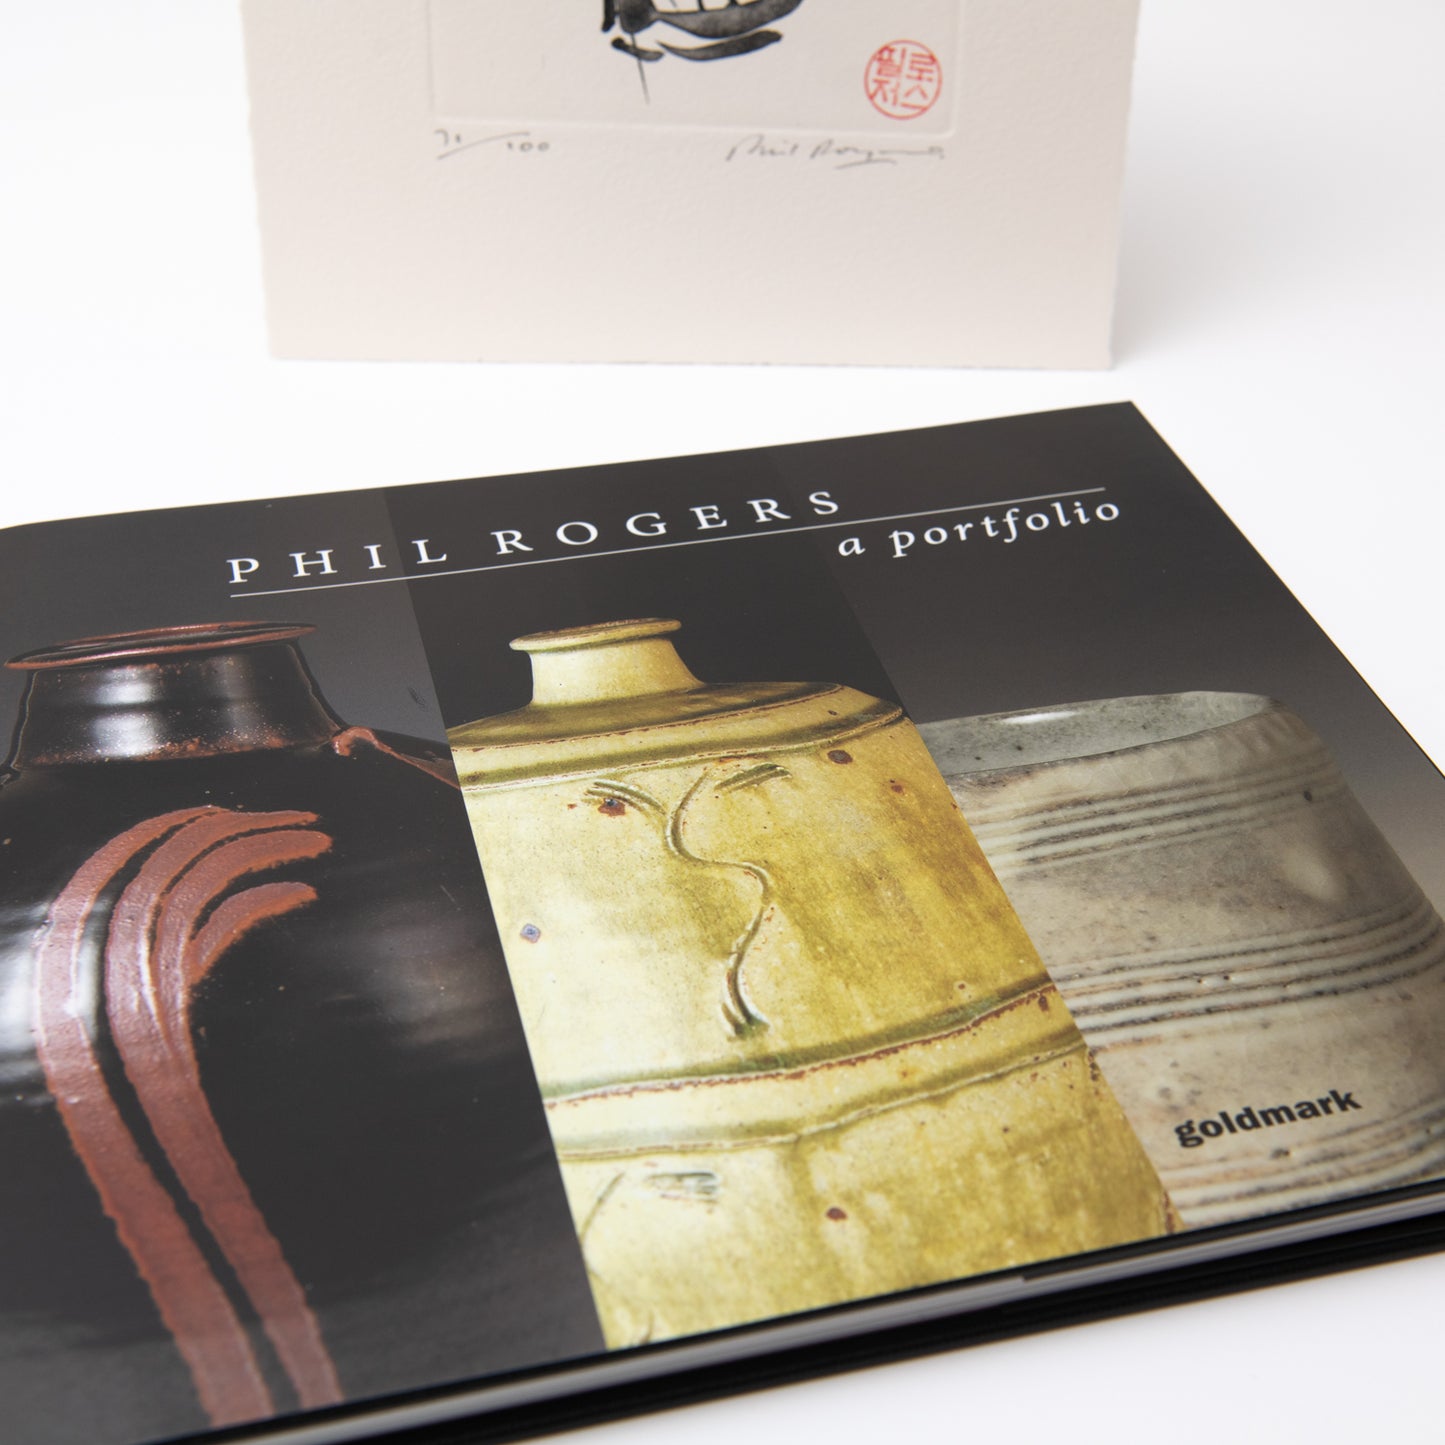 Phil Rogers - A Portfolio